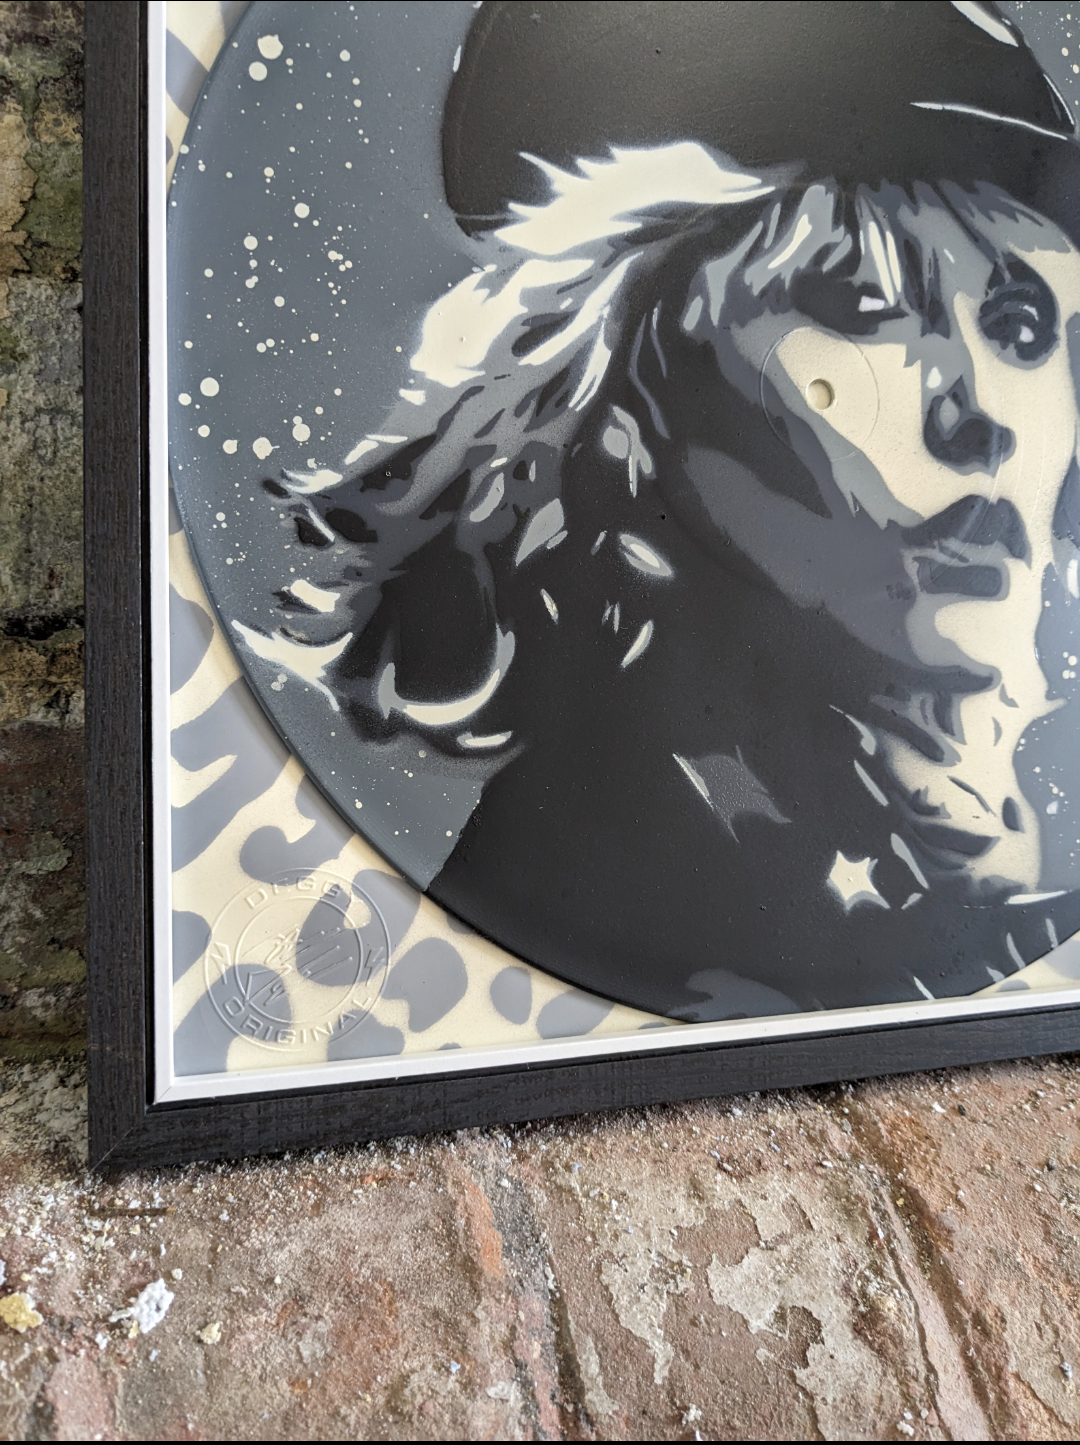 Debbie Harry 12" Vinyl Record Original Spray Painting